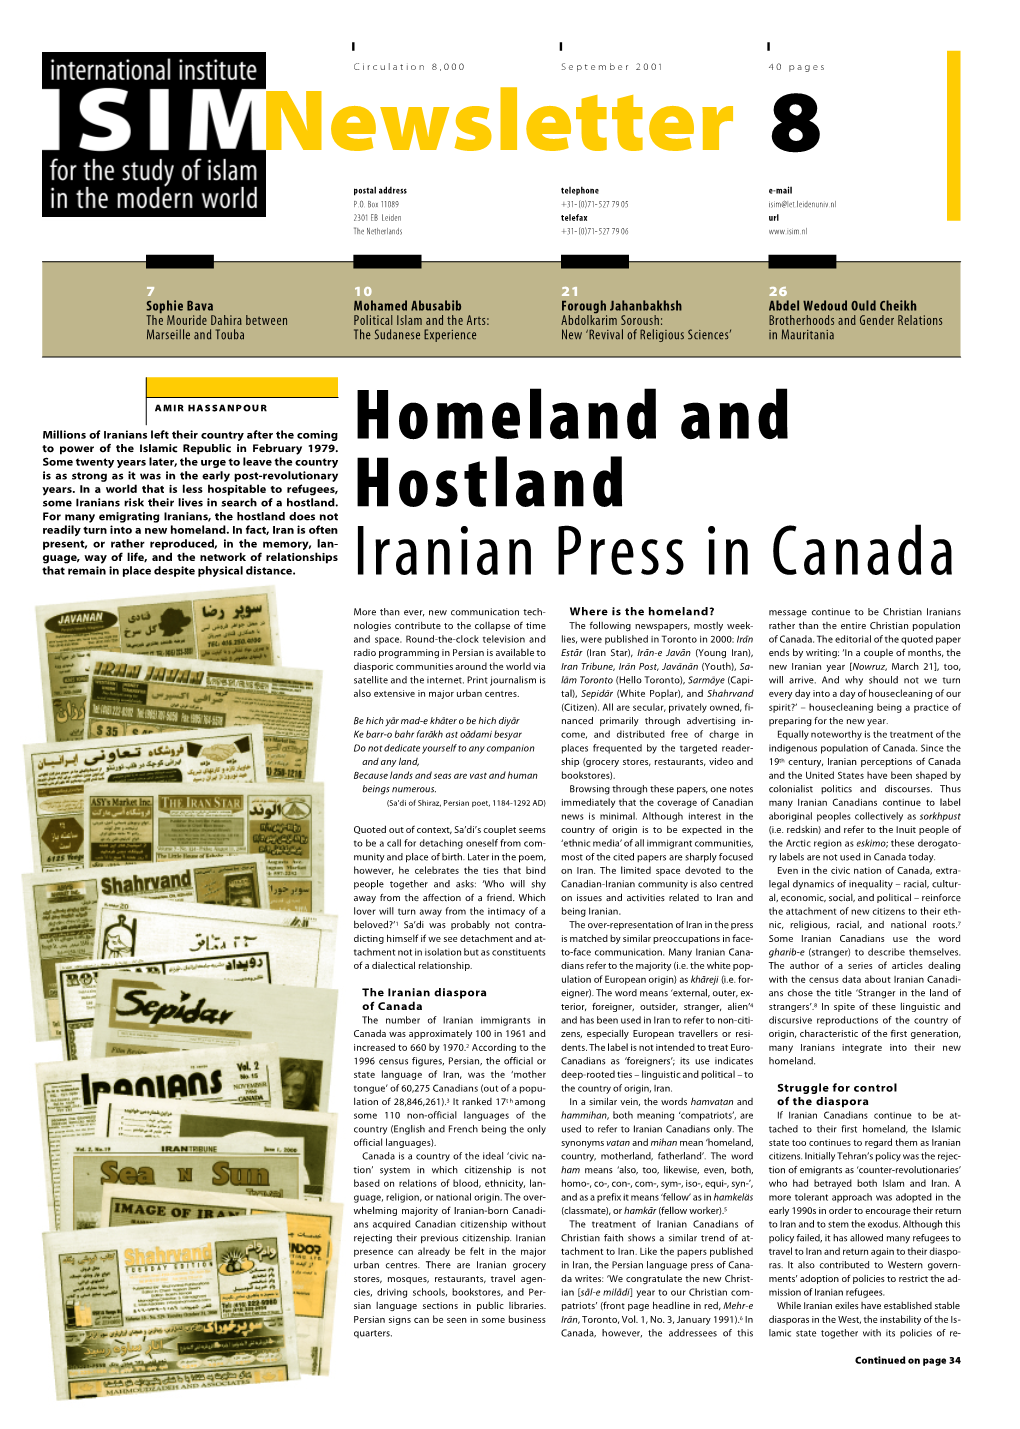 Homeland and Hostland Iranian Press in Canada